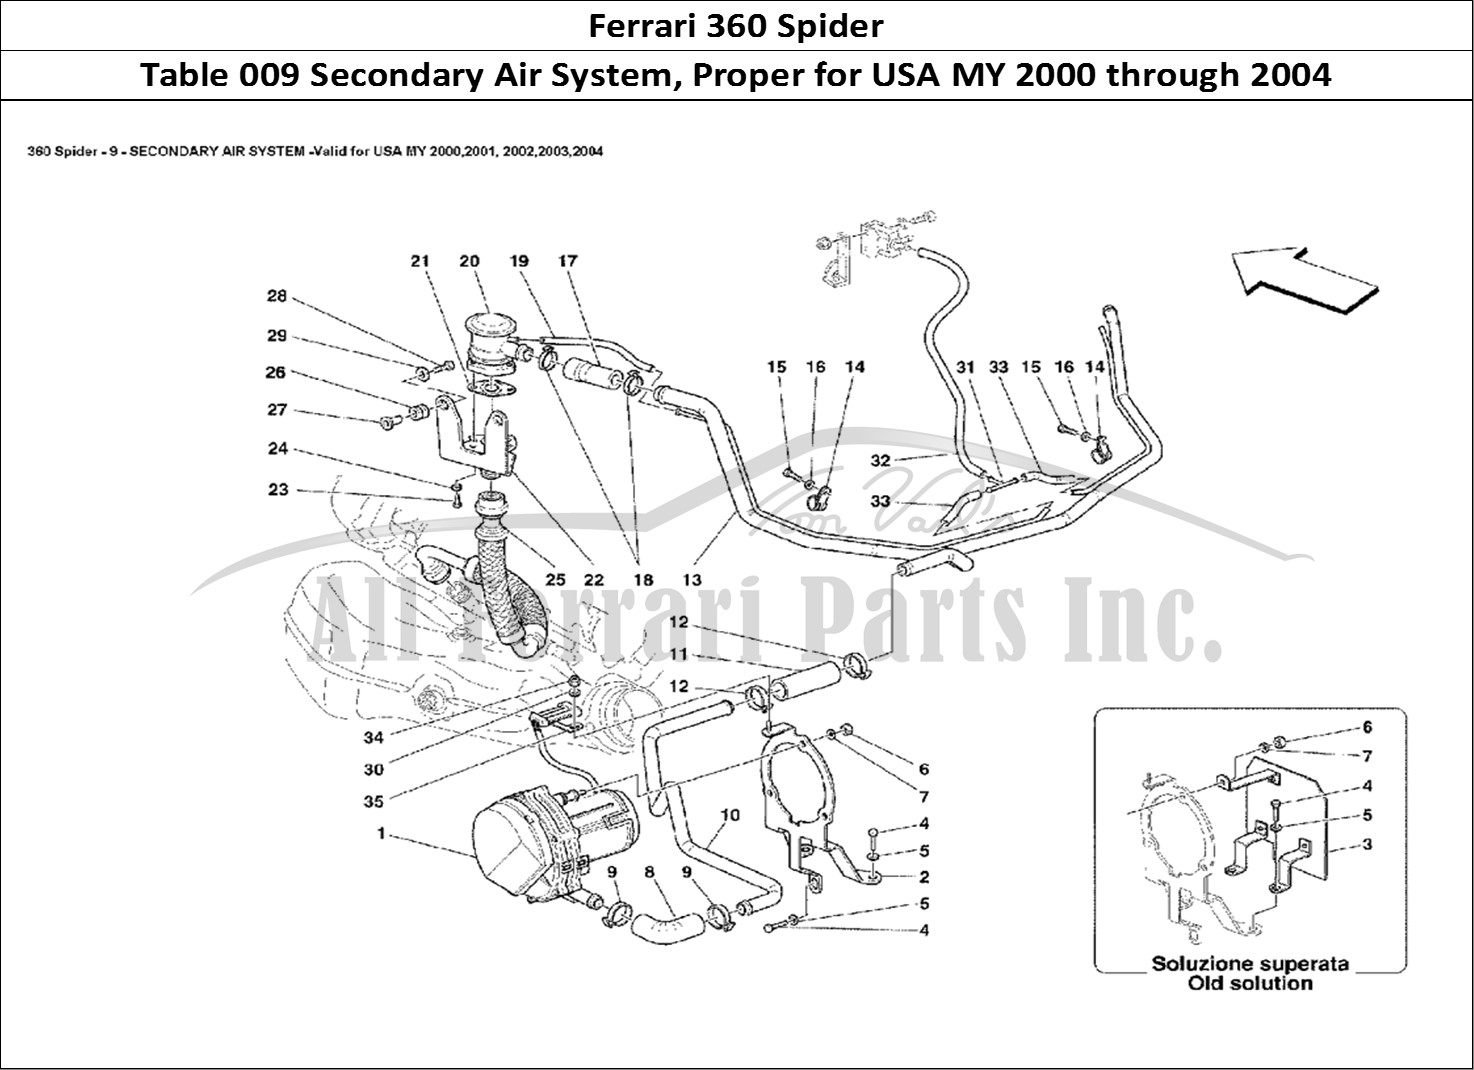 Ferrari Parts Ferrari 360 Spider Page 009 Secondary Air System - Va